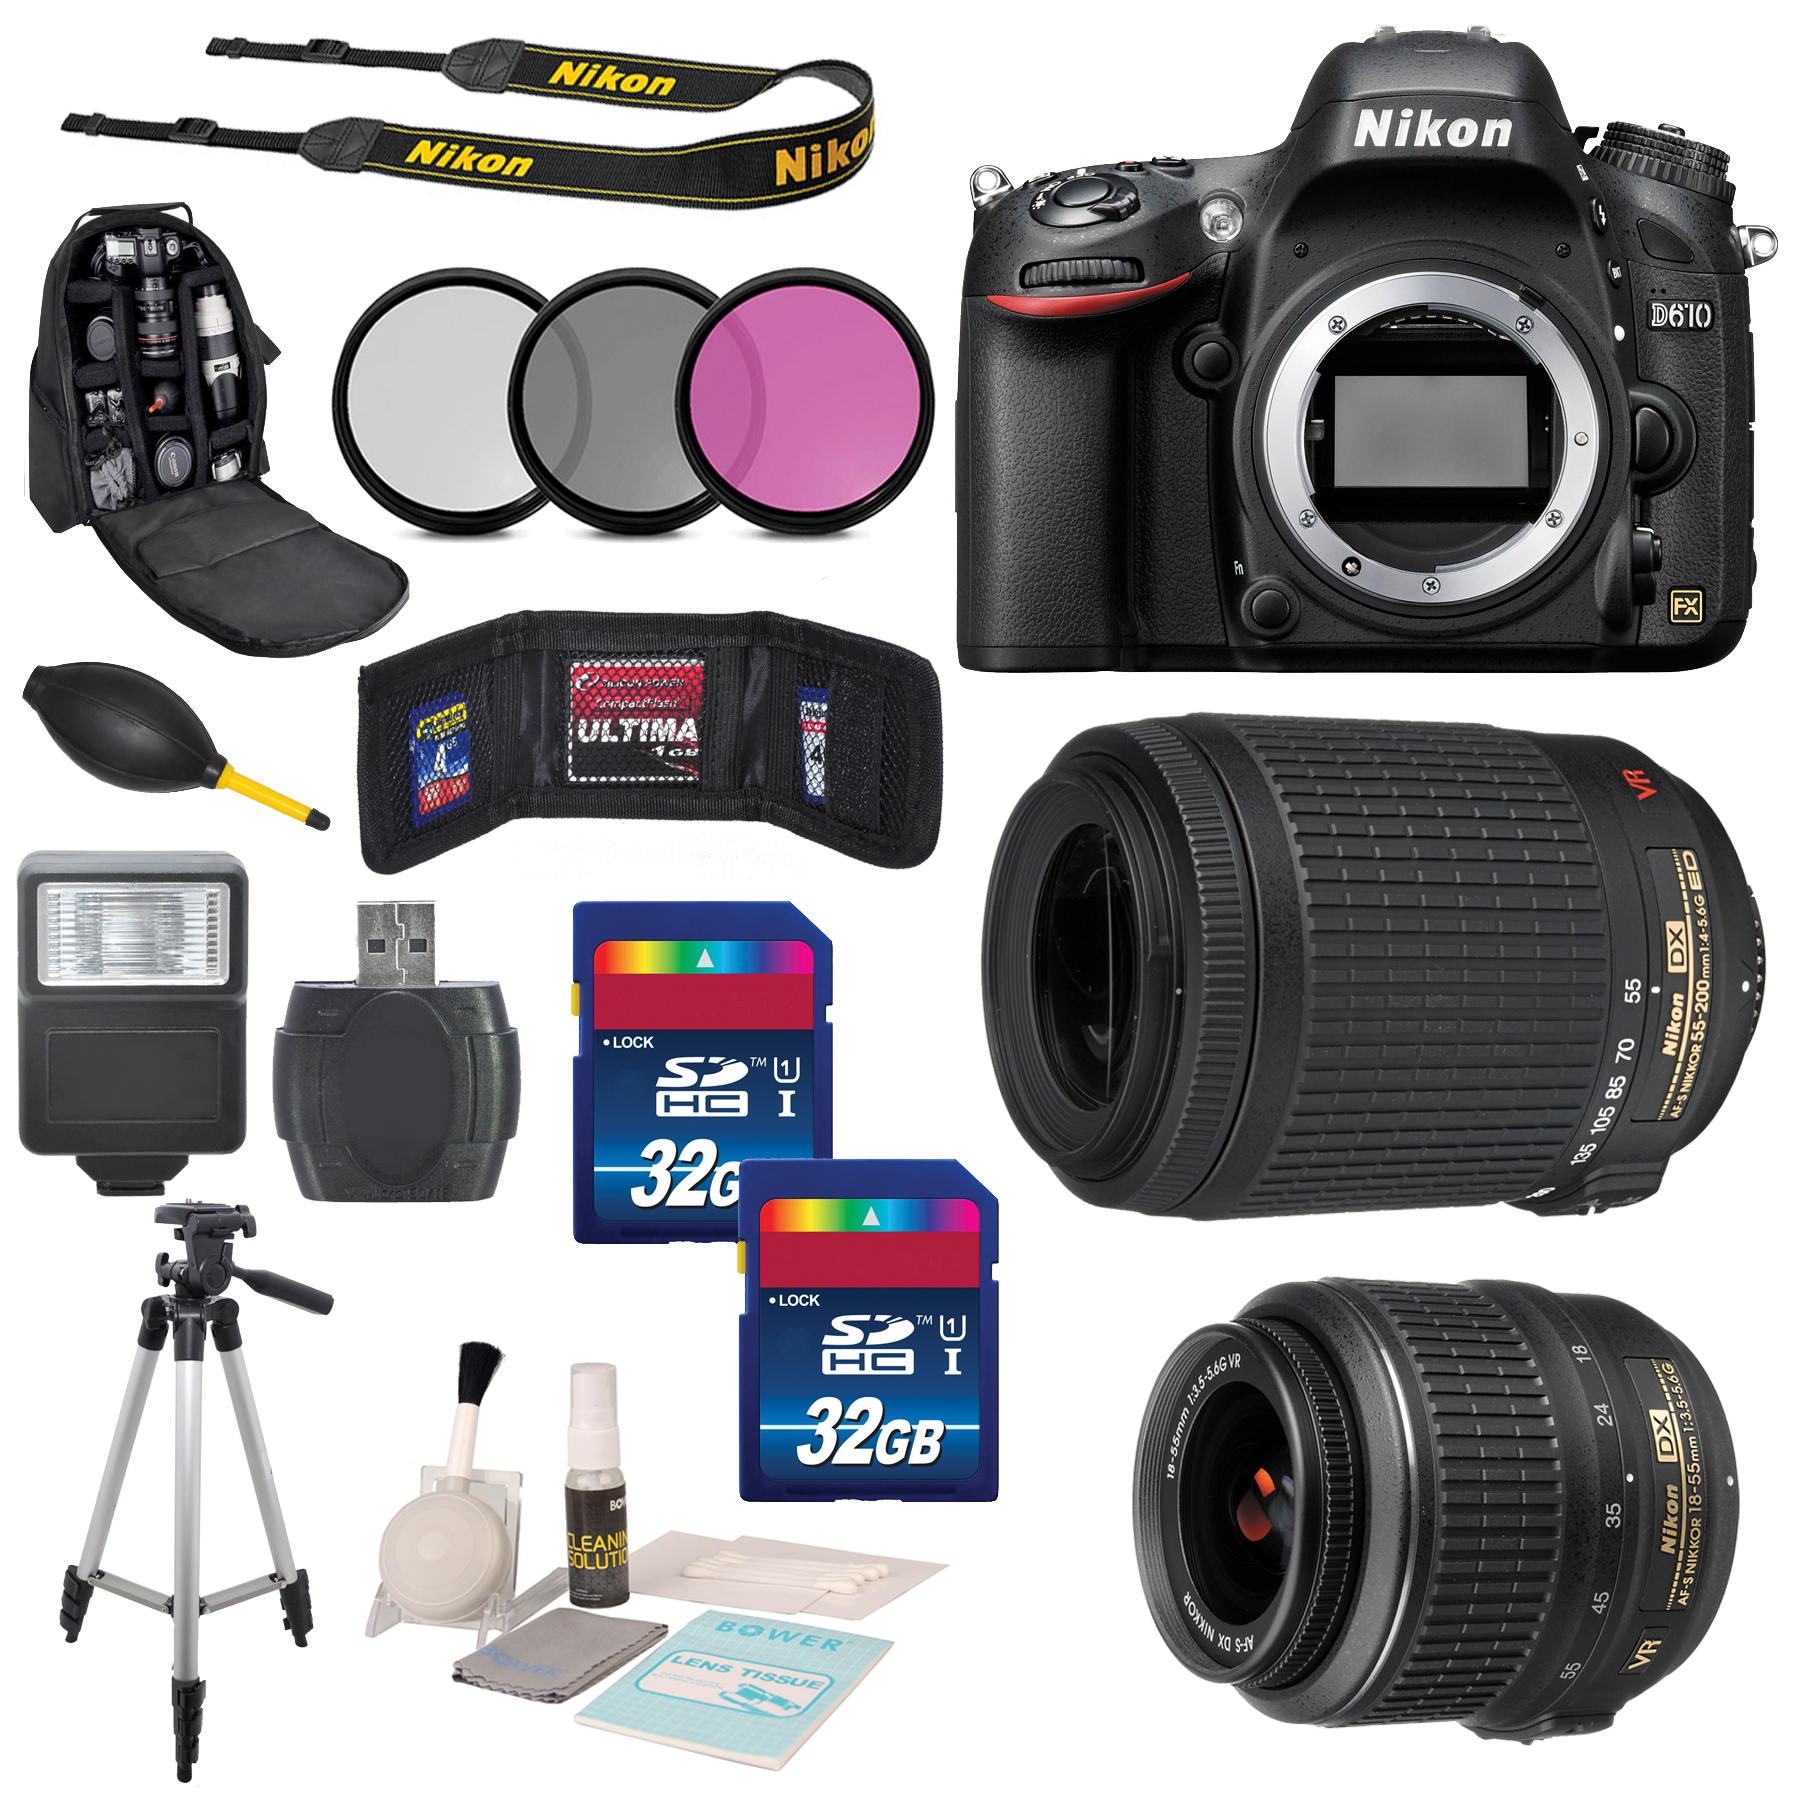 Hesje Temmen zo veel Nikon D610 Digital SLR Camera Body + Nikon AF-S DX NIKKOR 18-55mm  f/3.5-5.6G VR Lens & Nikon AF-S DX VR ZOOM NIKKOR 55-200mm f/4-5.6G IF-ED  Lens Accessory 64GB Bundle DSLR610KIT56